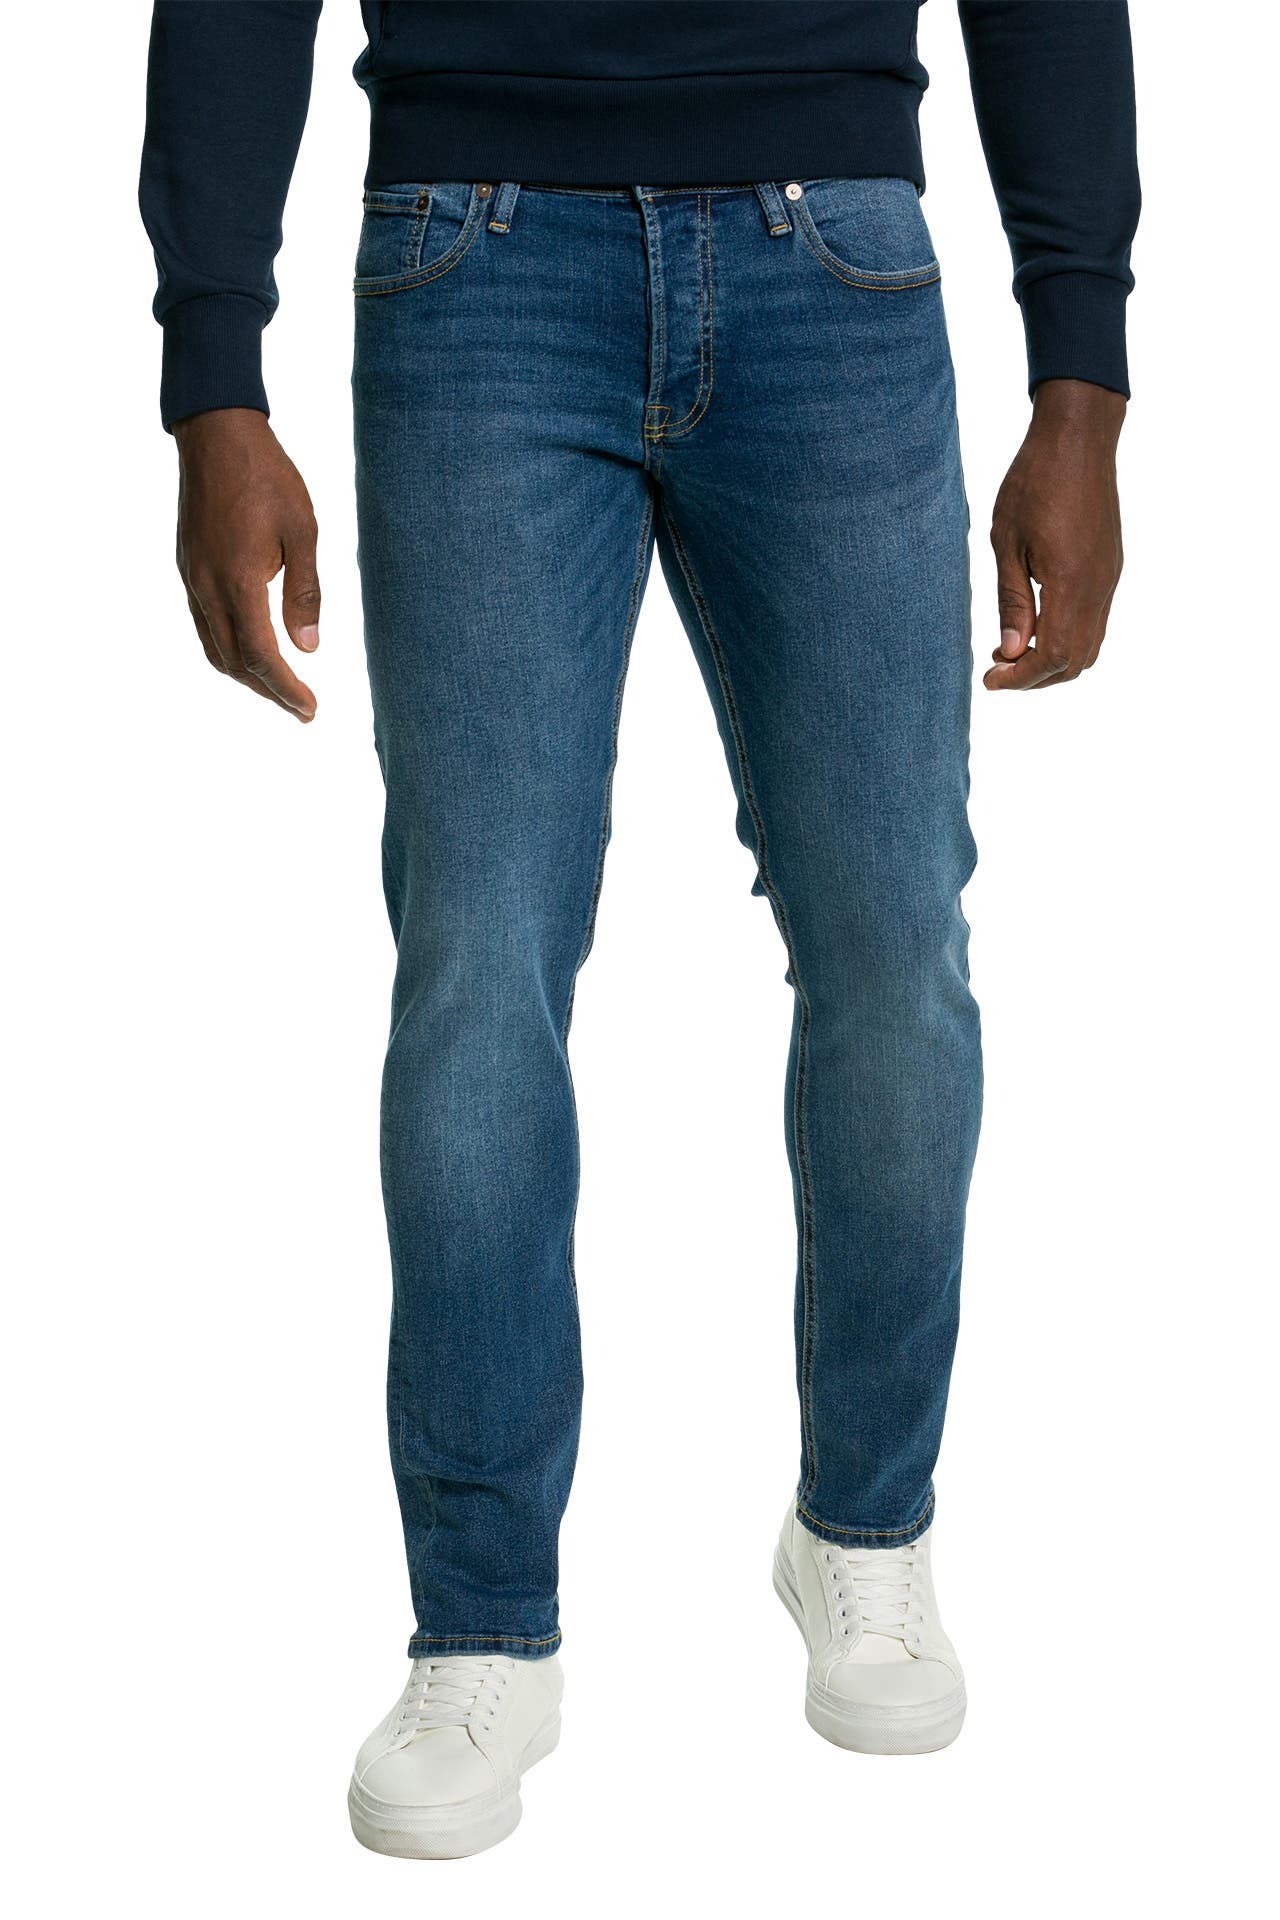 Knipperen Raap geest Jeans 'Glenn' slim - JACK & JONES » günstig online kaufen | OUTLETCITY.COM